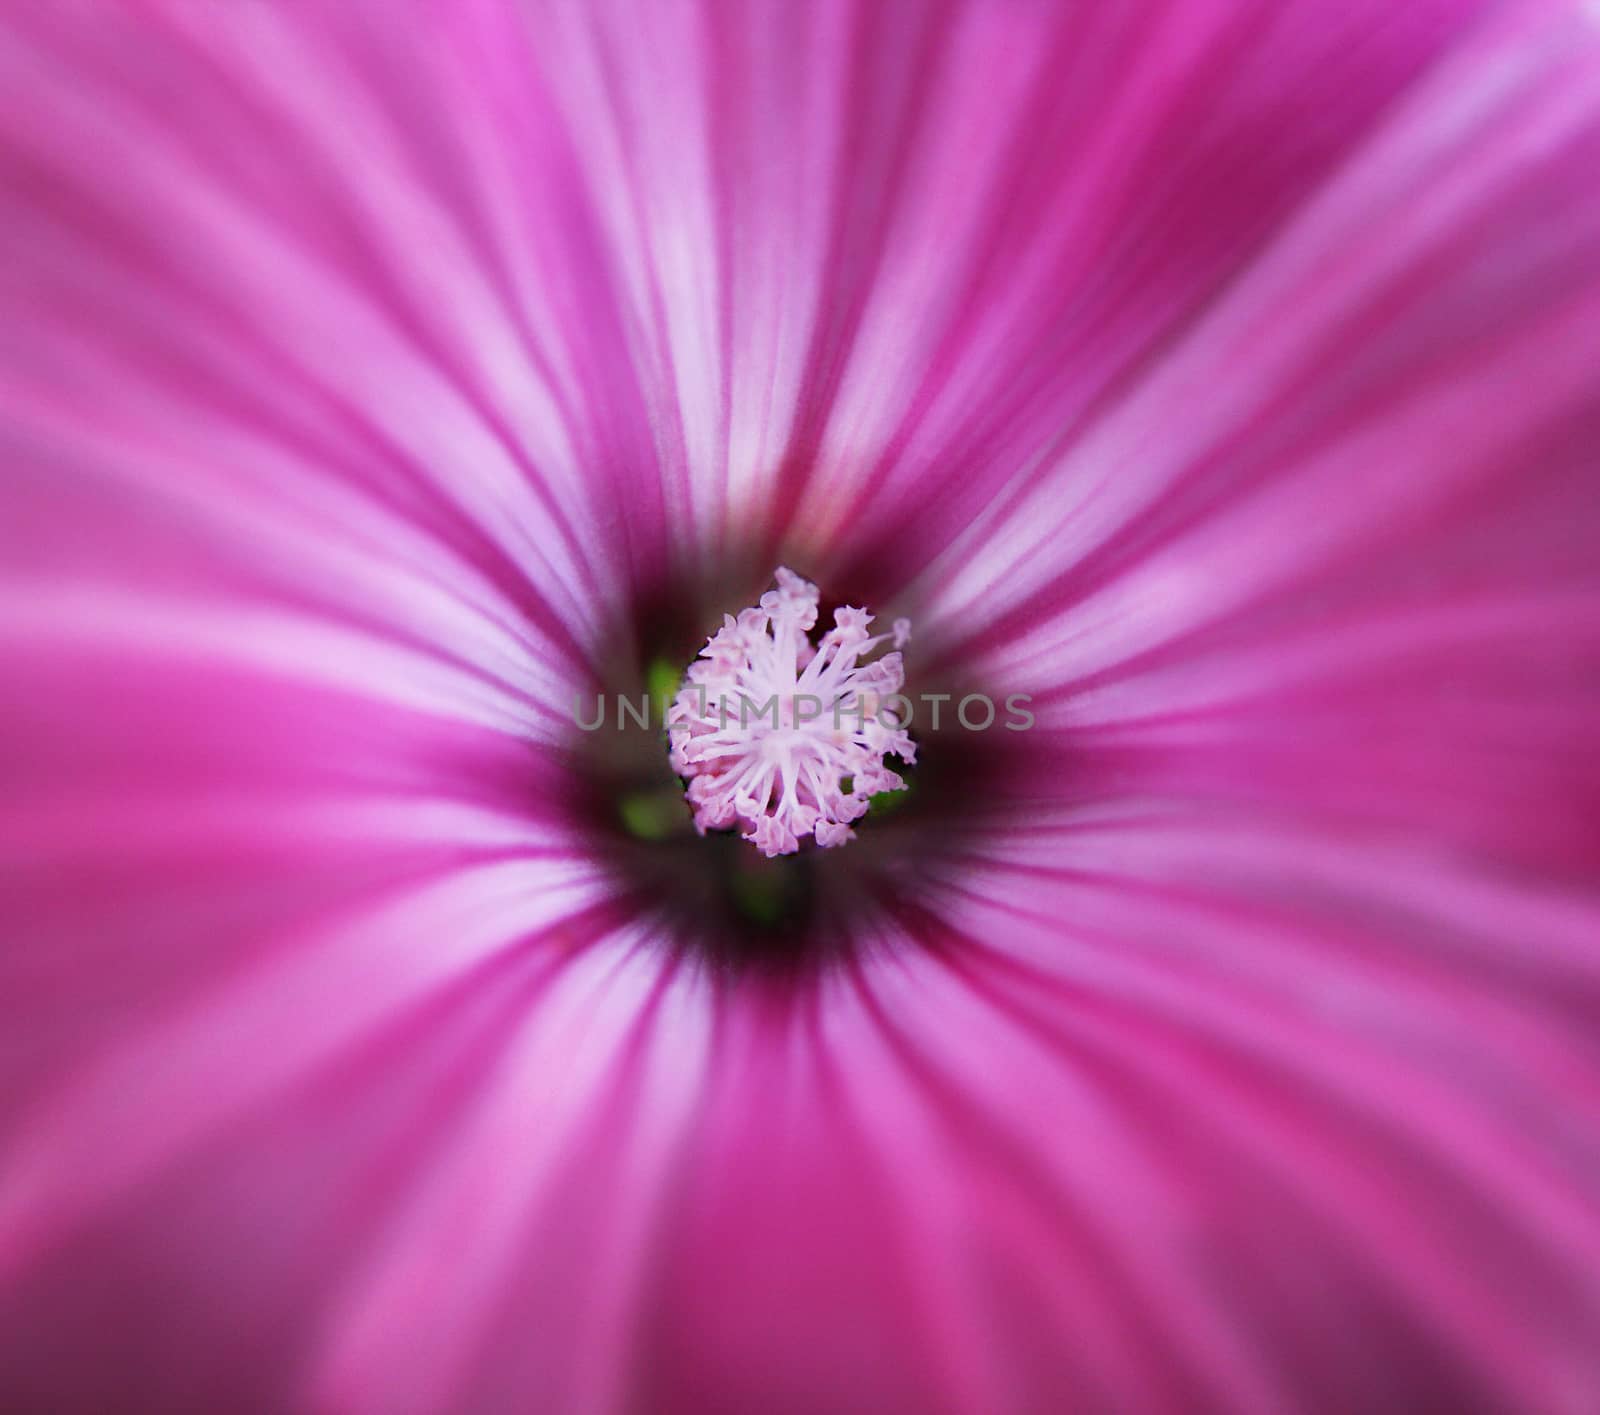 Inside a flower by stefanoventuri